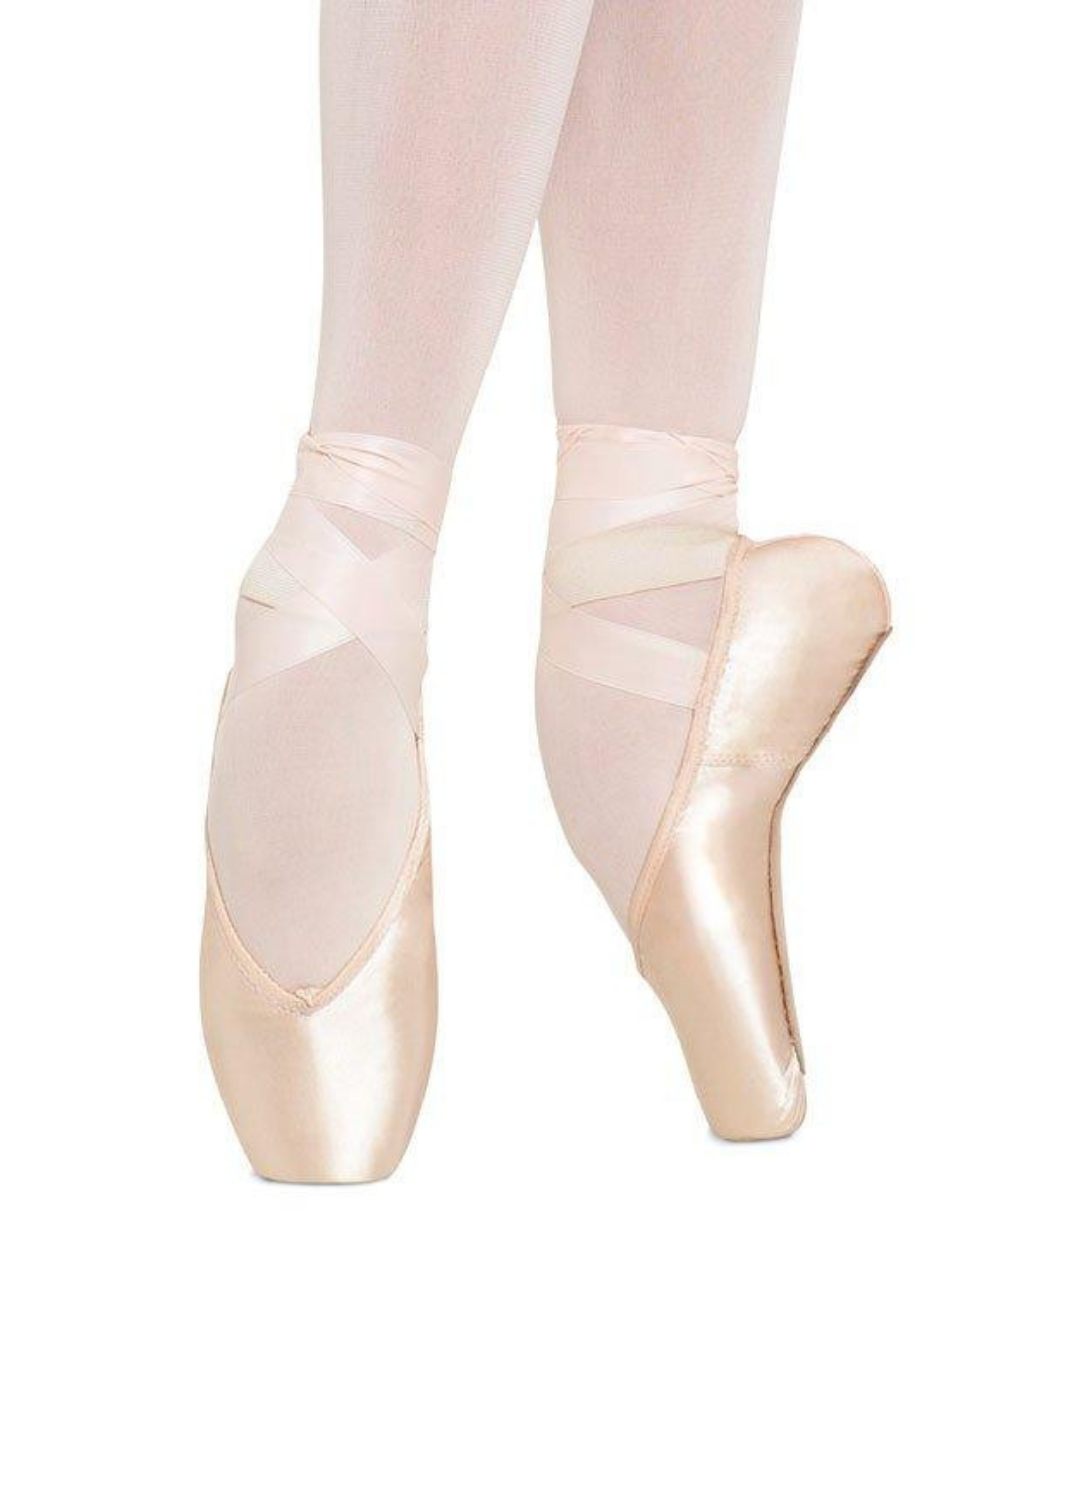 Bloch Unisex 1 inch Ballet Shoe Elastic